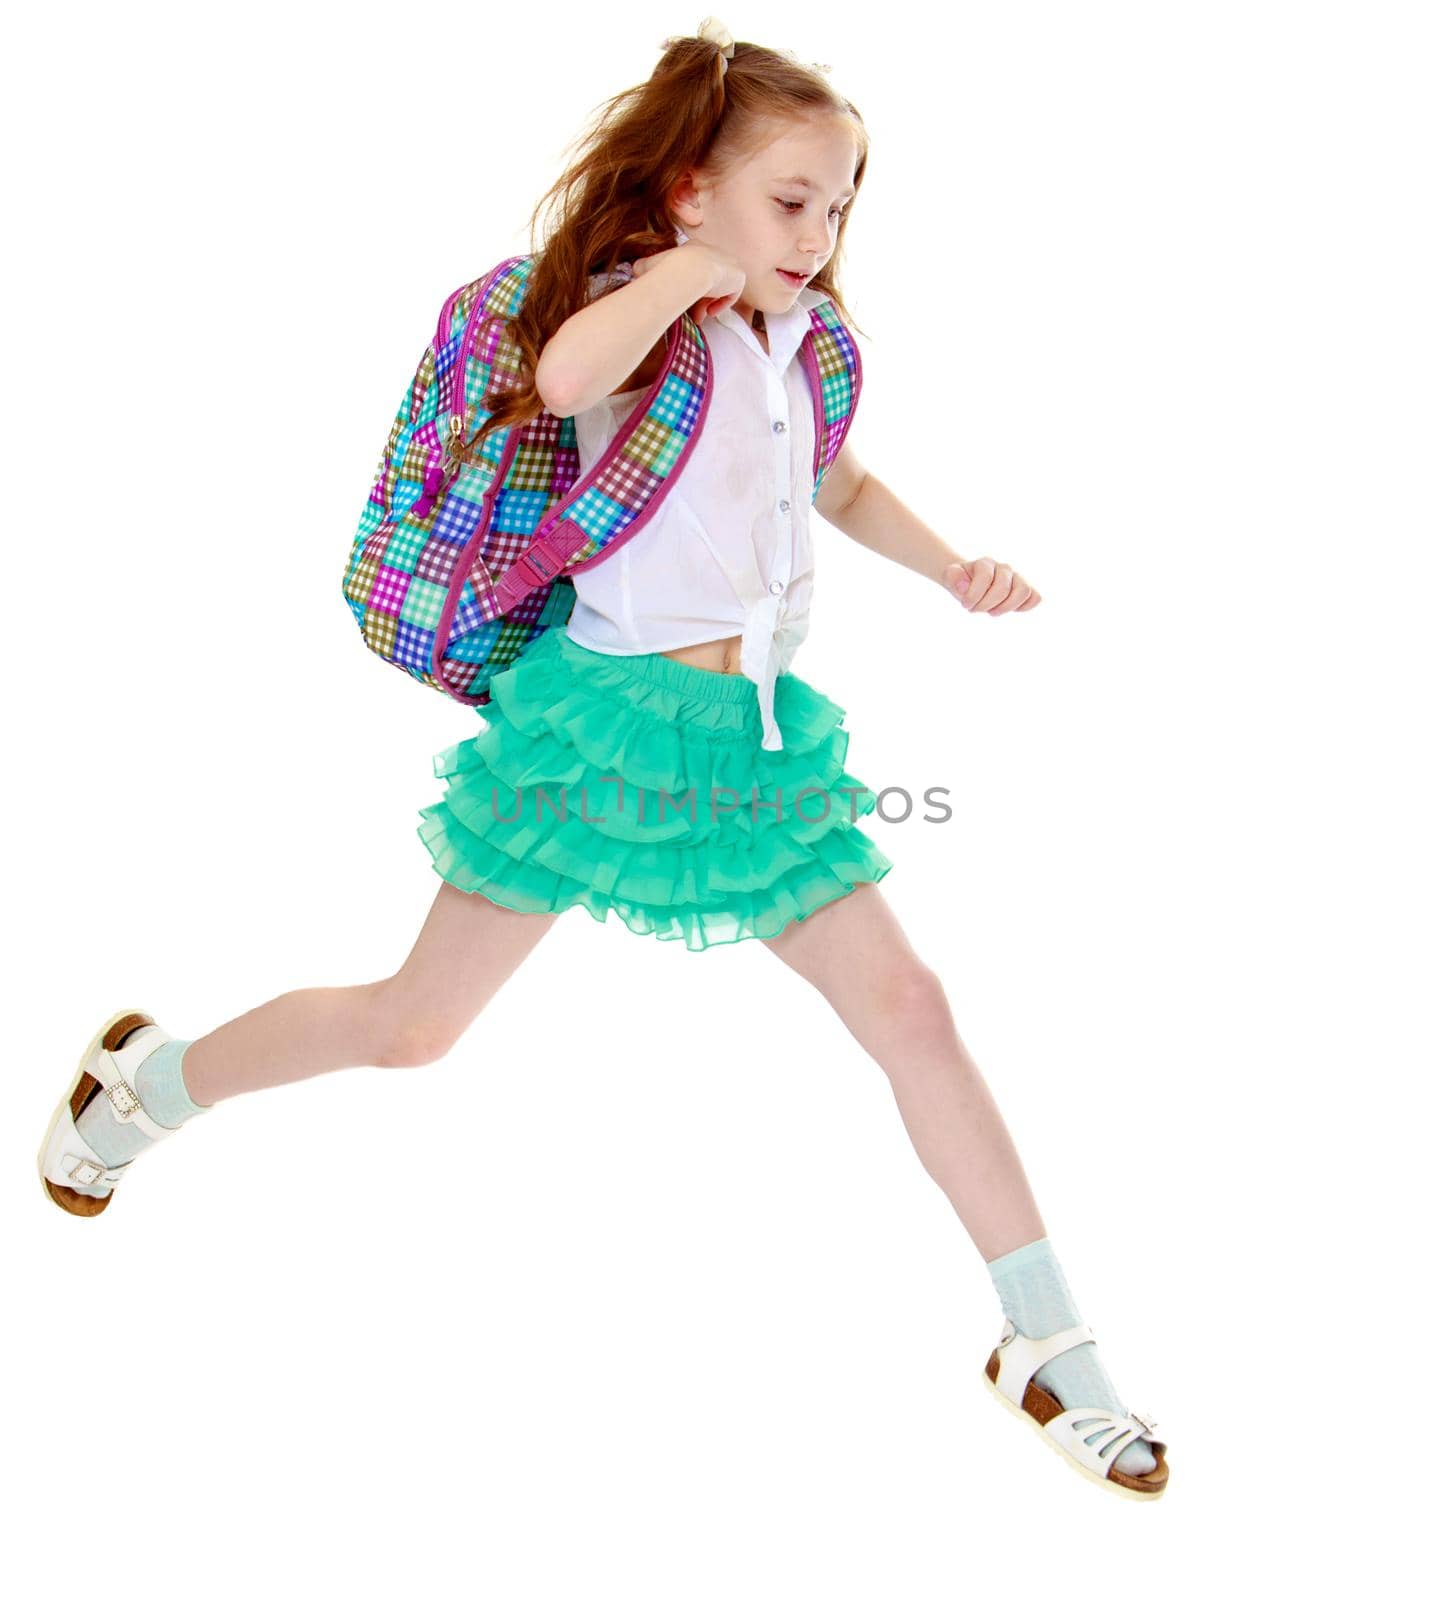 Schoolgirl jumping with a briefcase by kolesnikov_studio